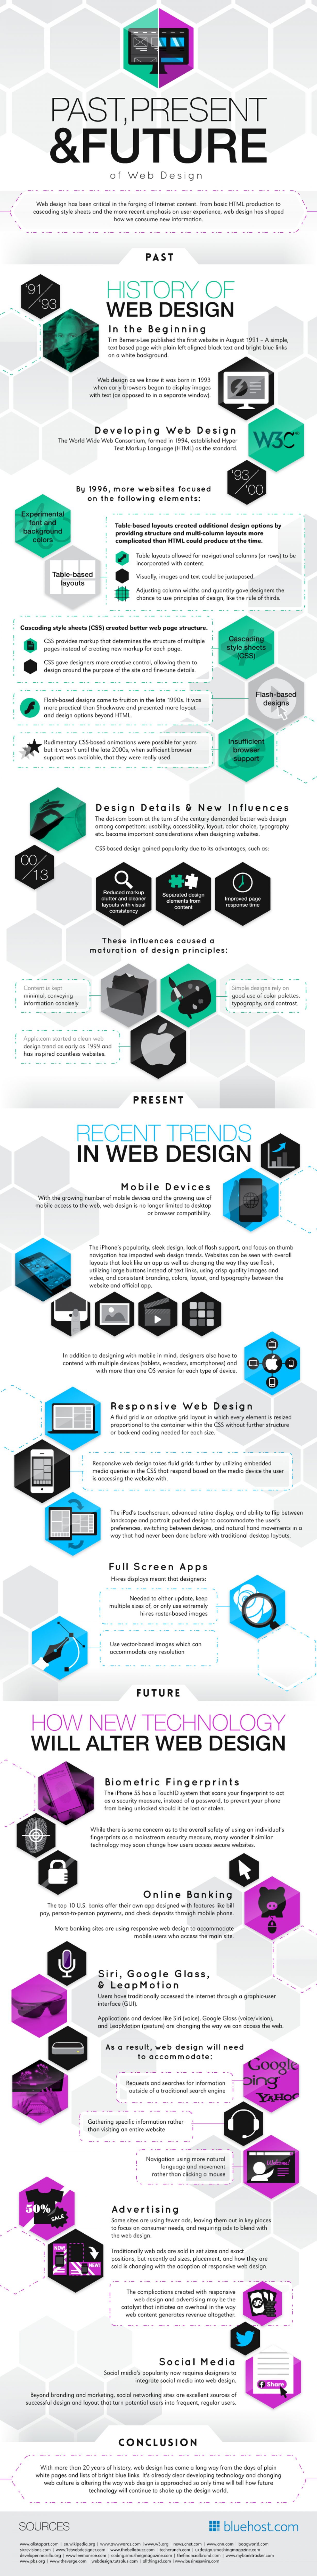 Past, Present and Future of Web Design